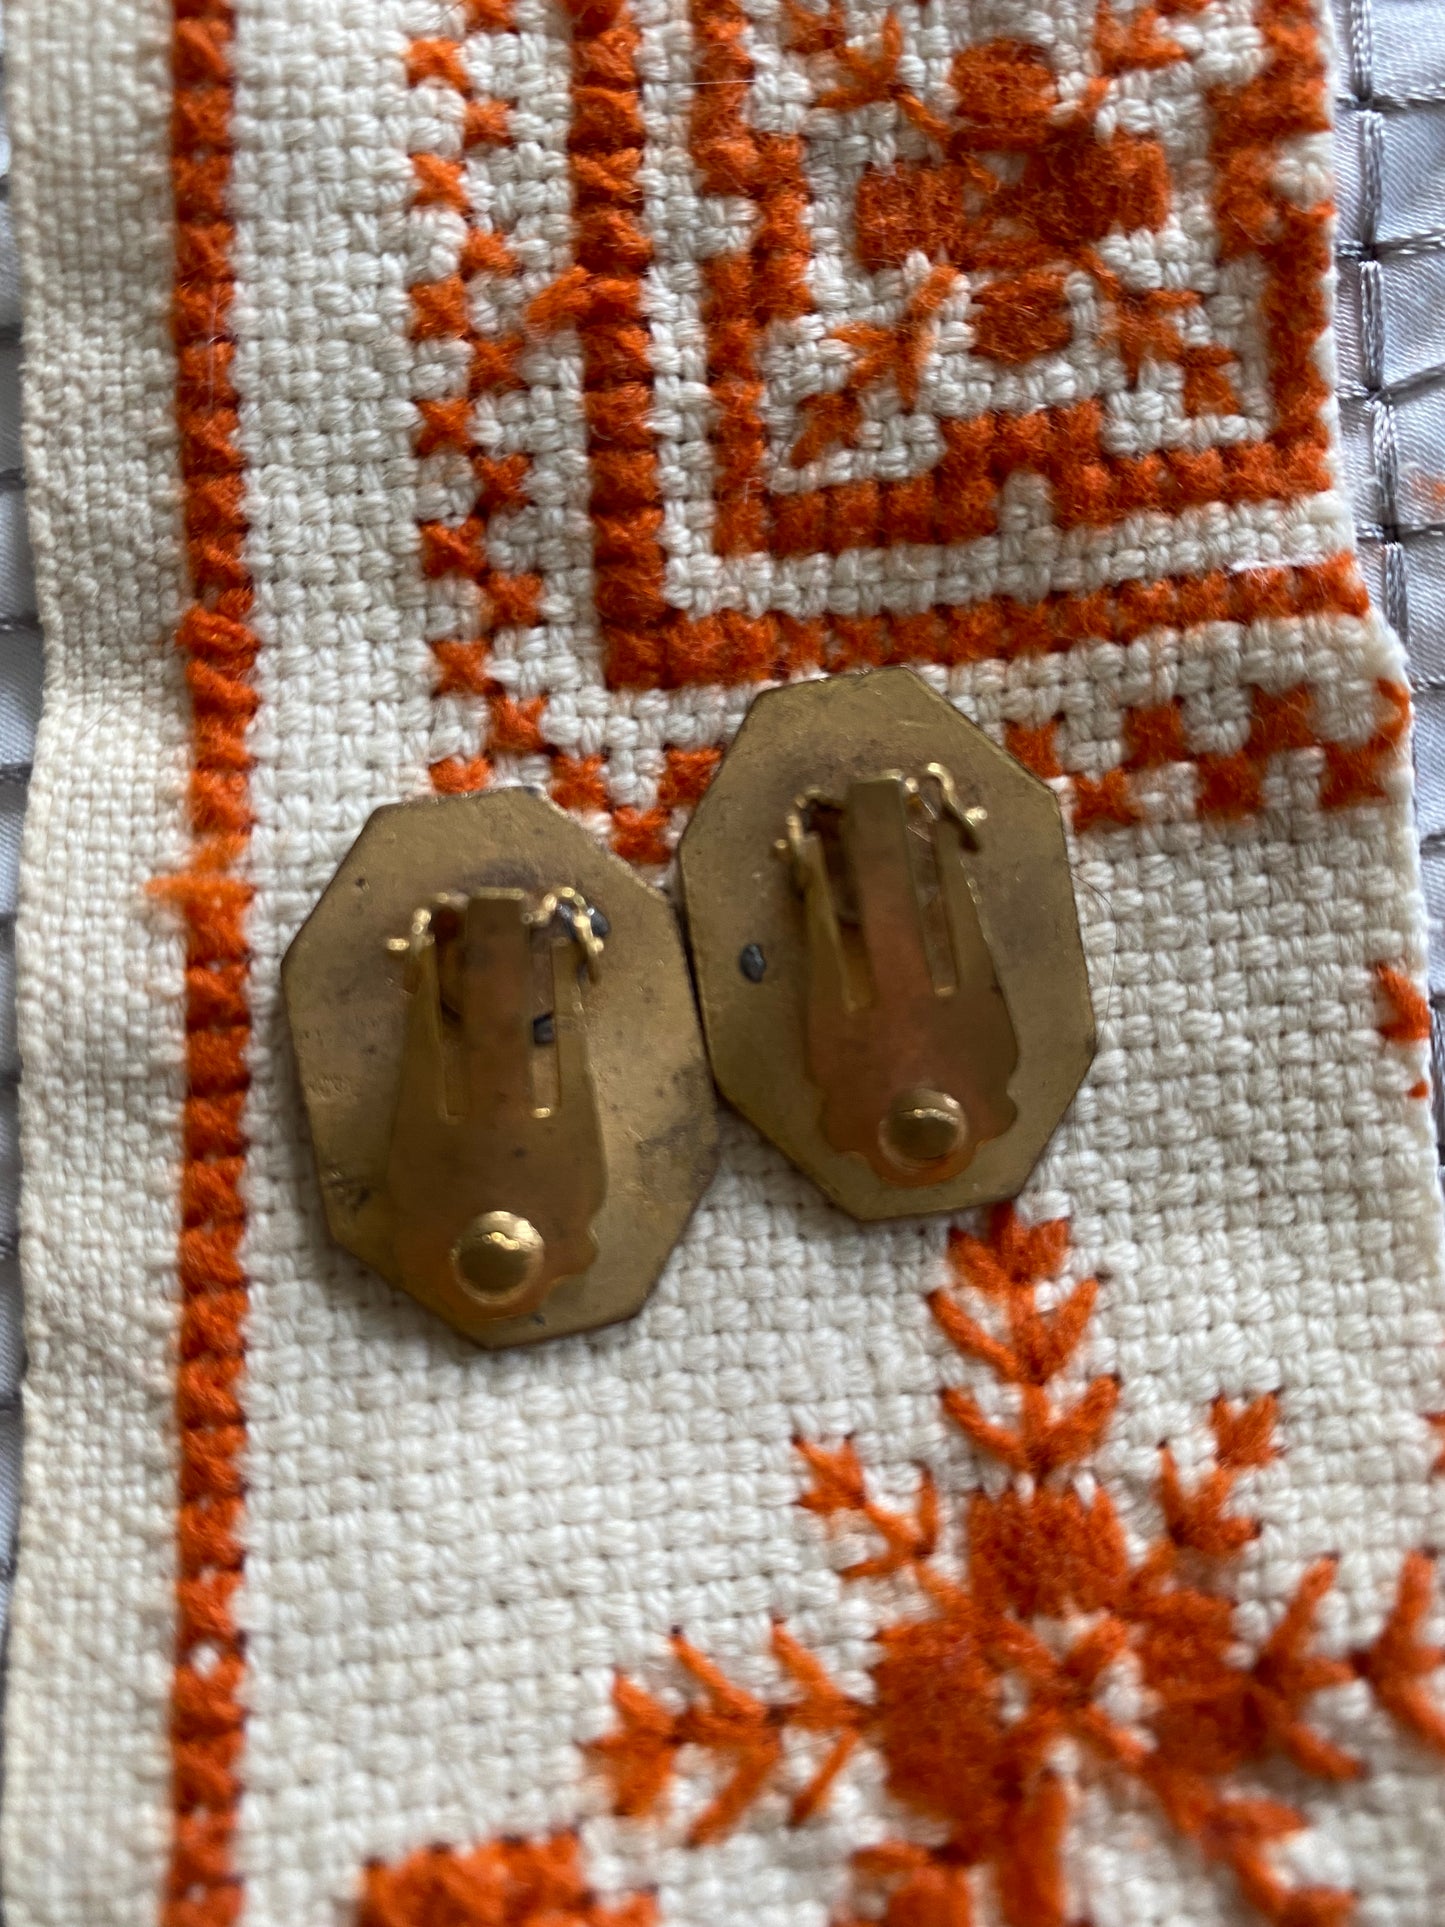 Vintage Egyptian Jewelry - necklace, clip earrings, brooch